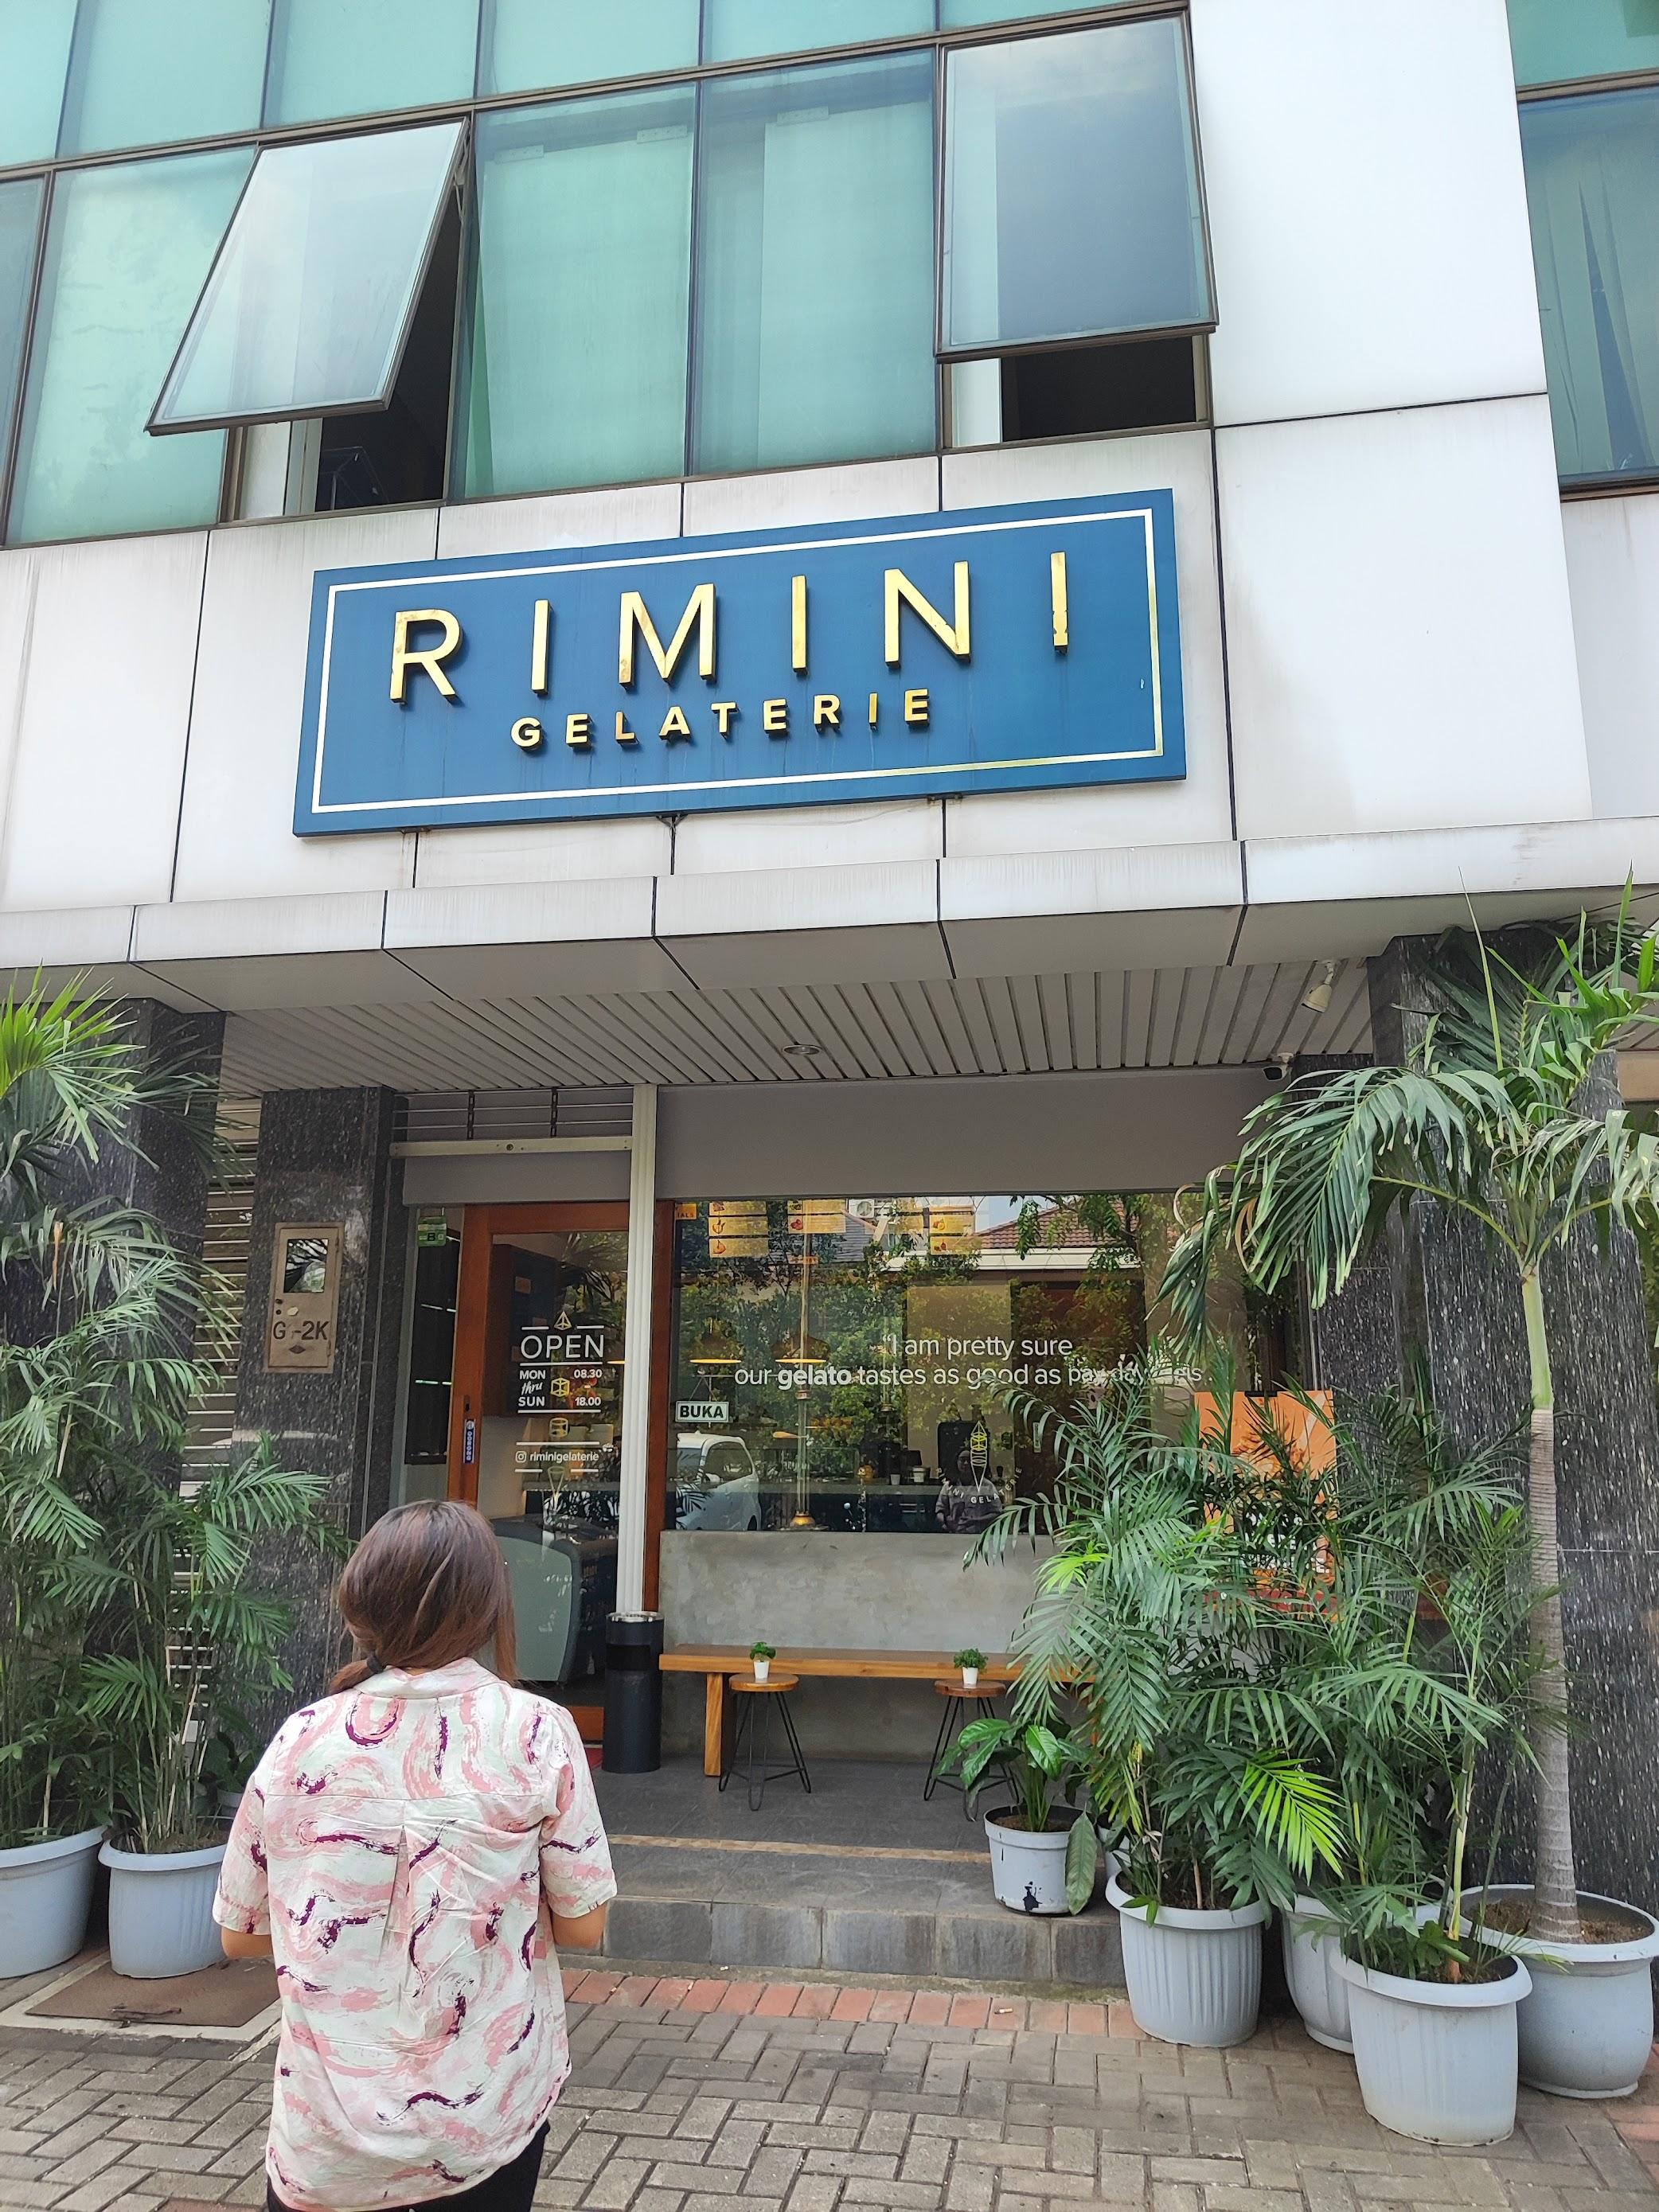 Rimini Gelaterie review